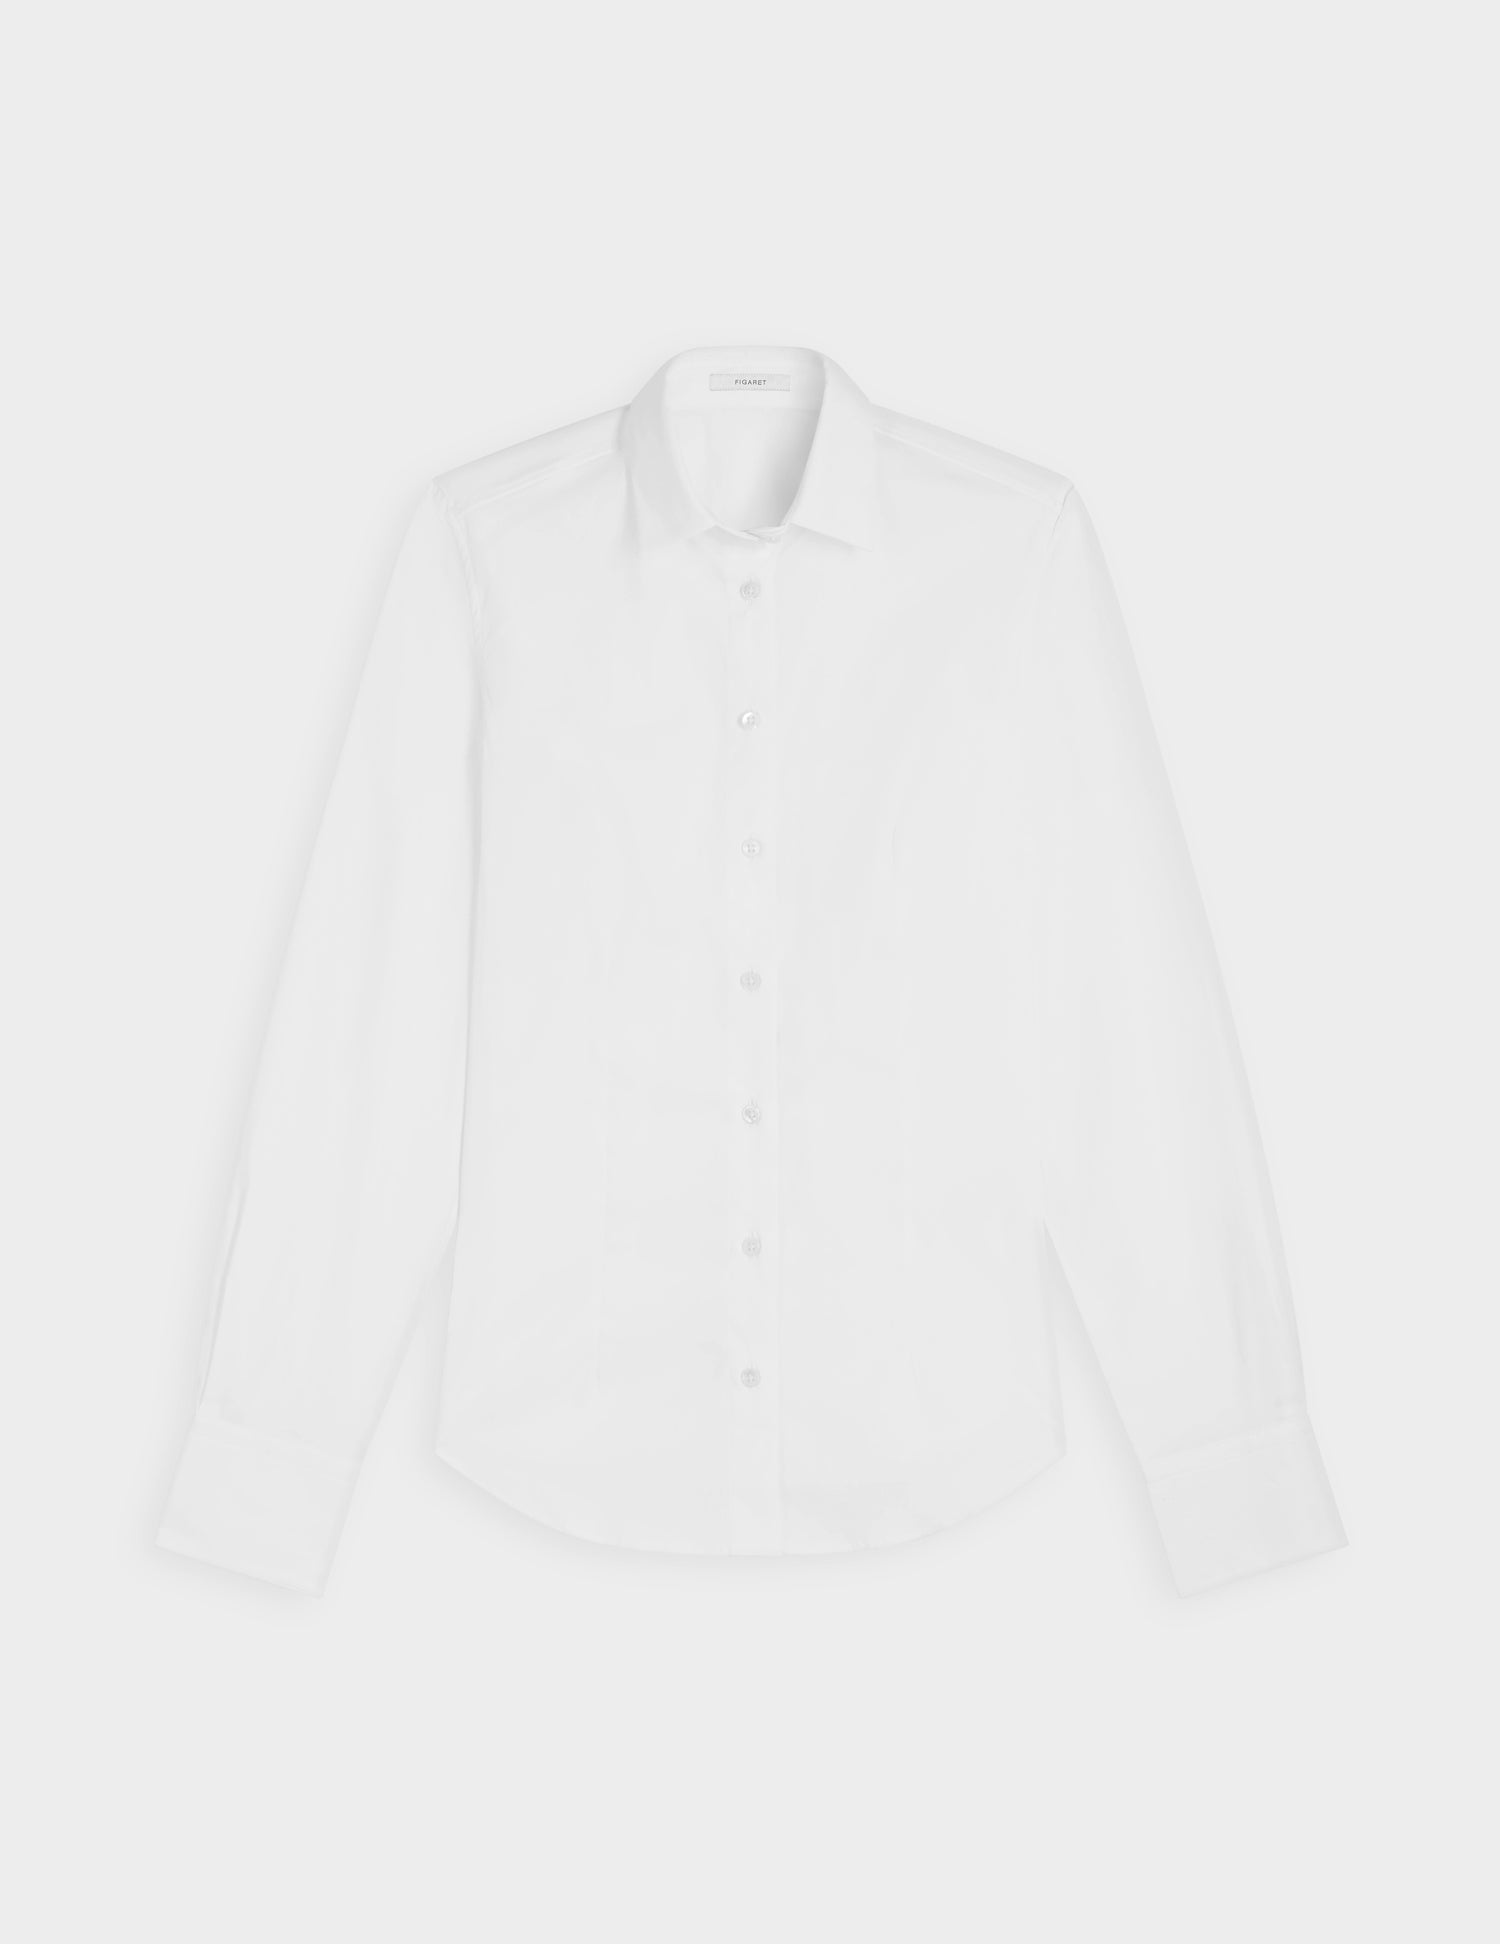 Fitted white Anais shirt - Poplin#3